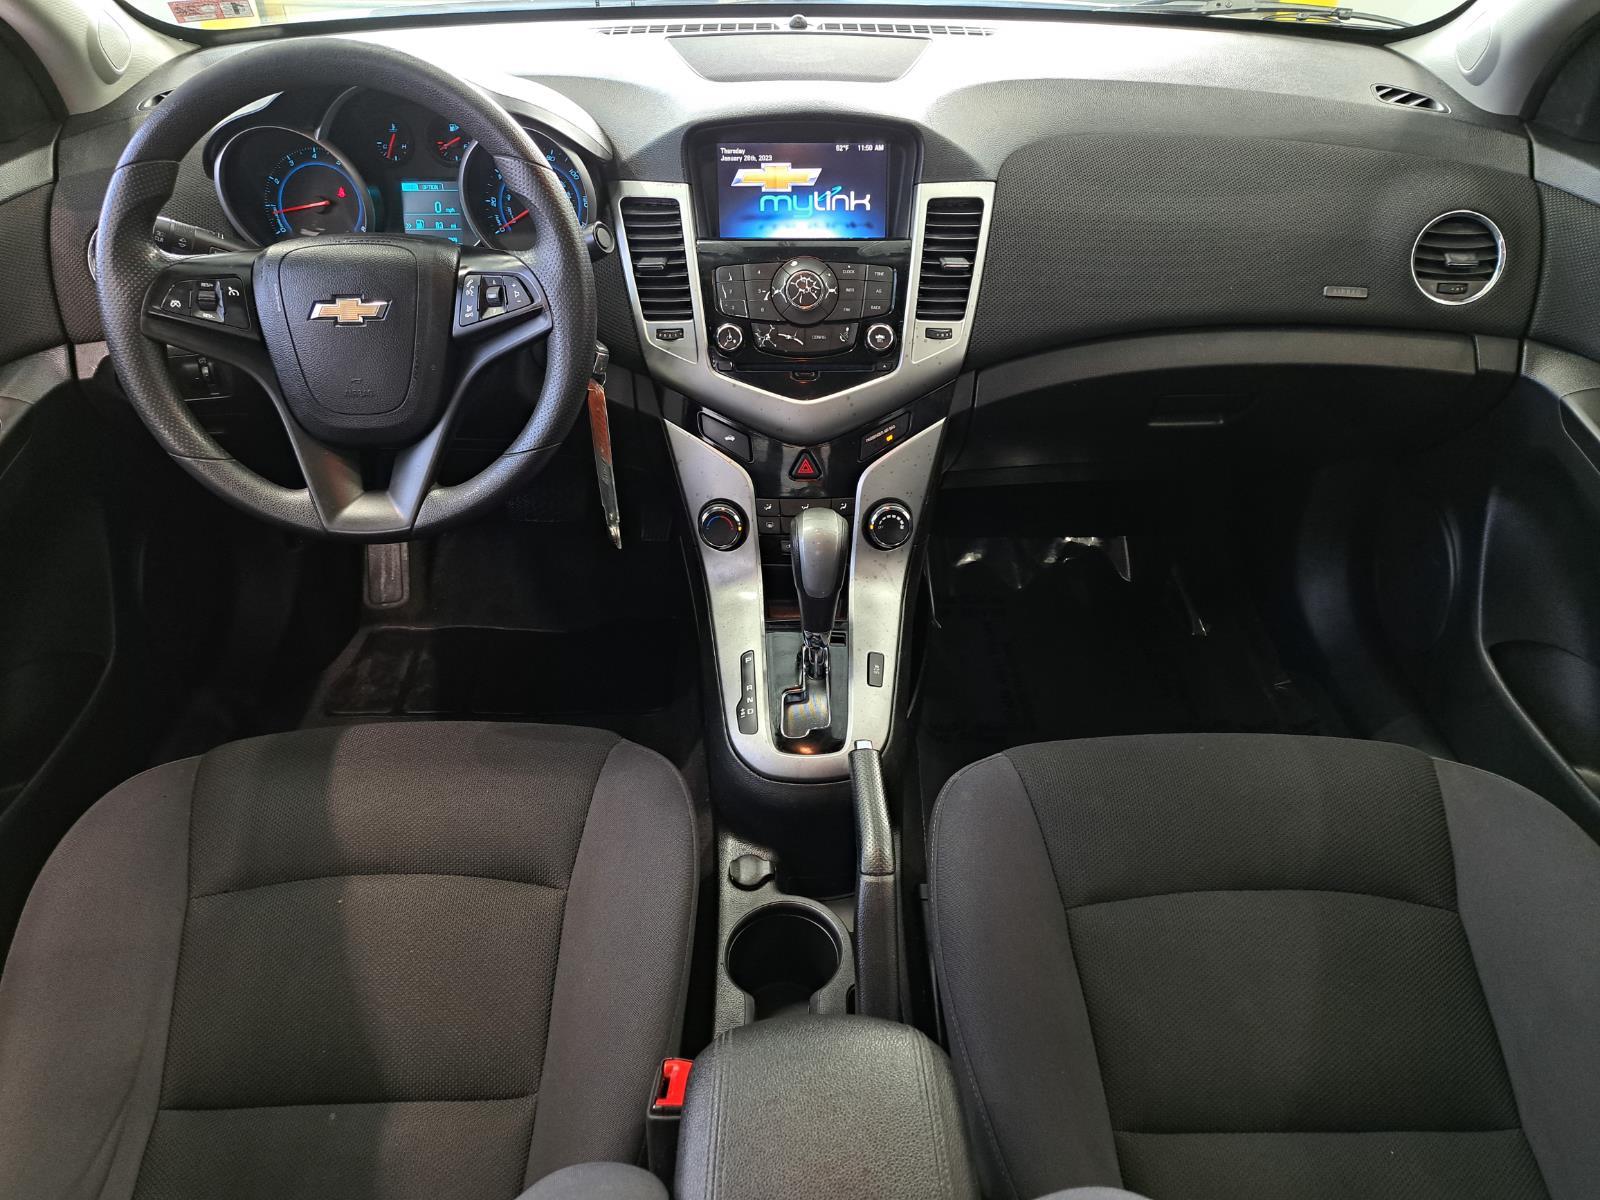 2015 Chevrolet Cruze LT Sedan 4 Dr. Front Wheel Drive 7